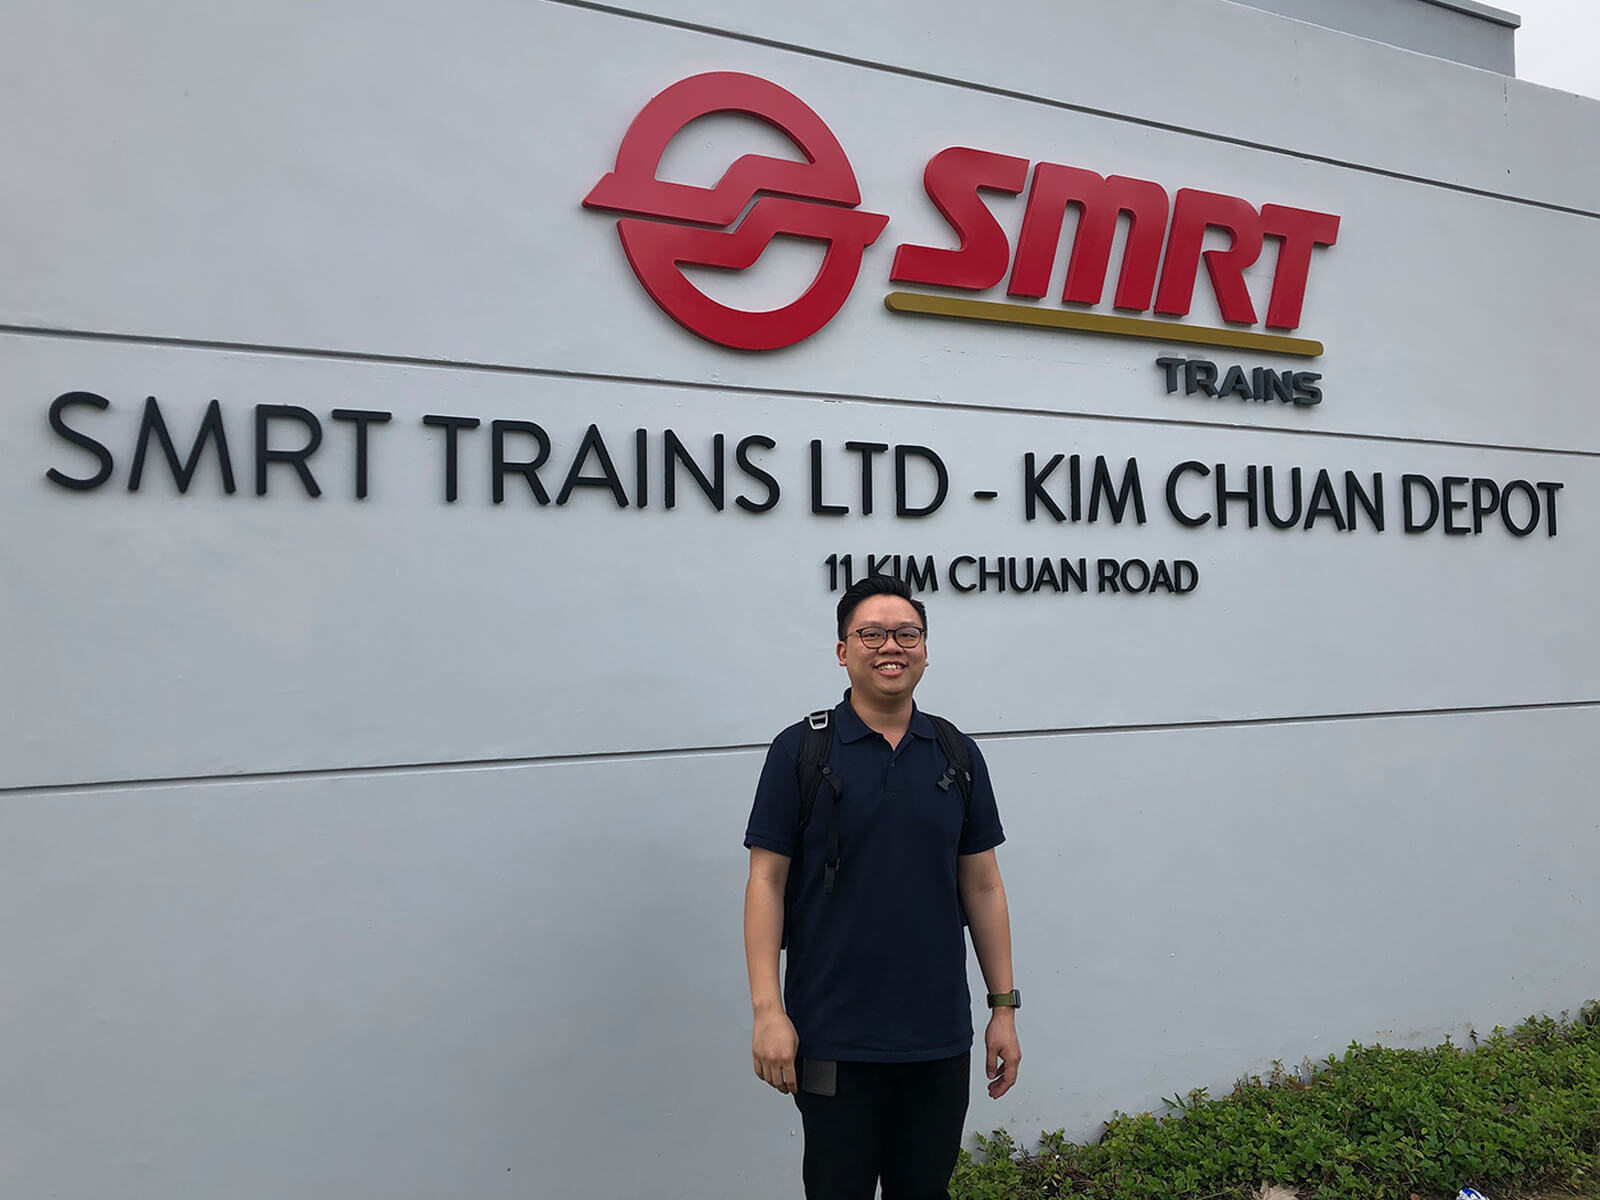 Samuel Tan stands in front of the ‘SMRT Trains Ltd. - Kim Chuan Depot” sign.